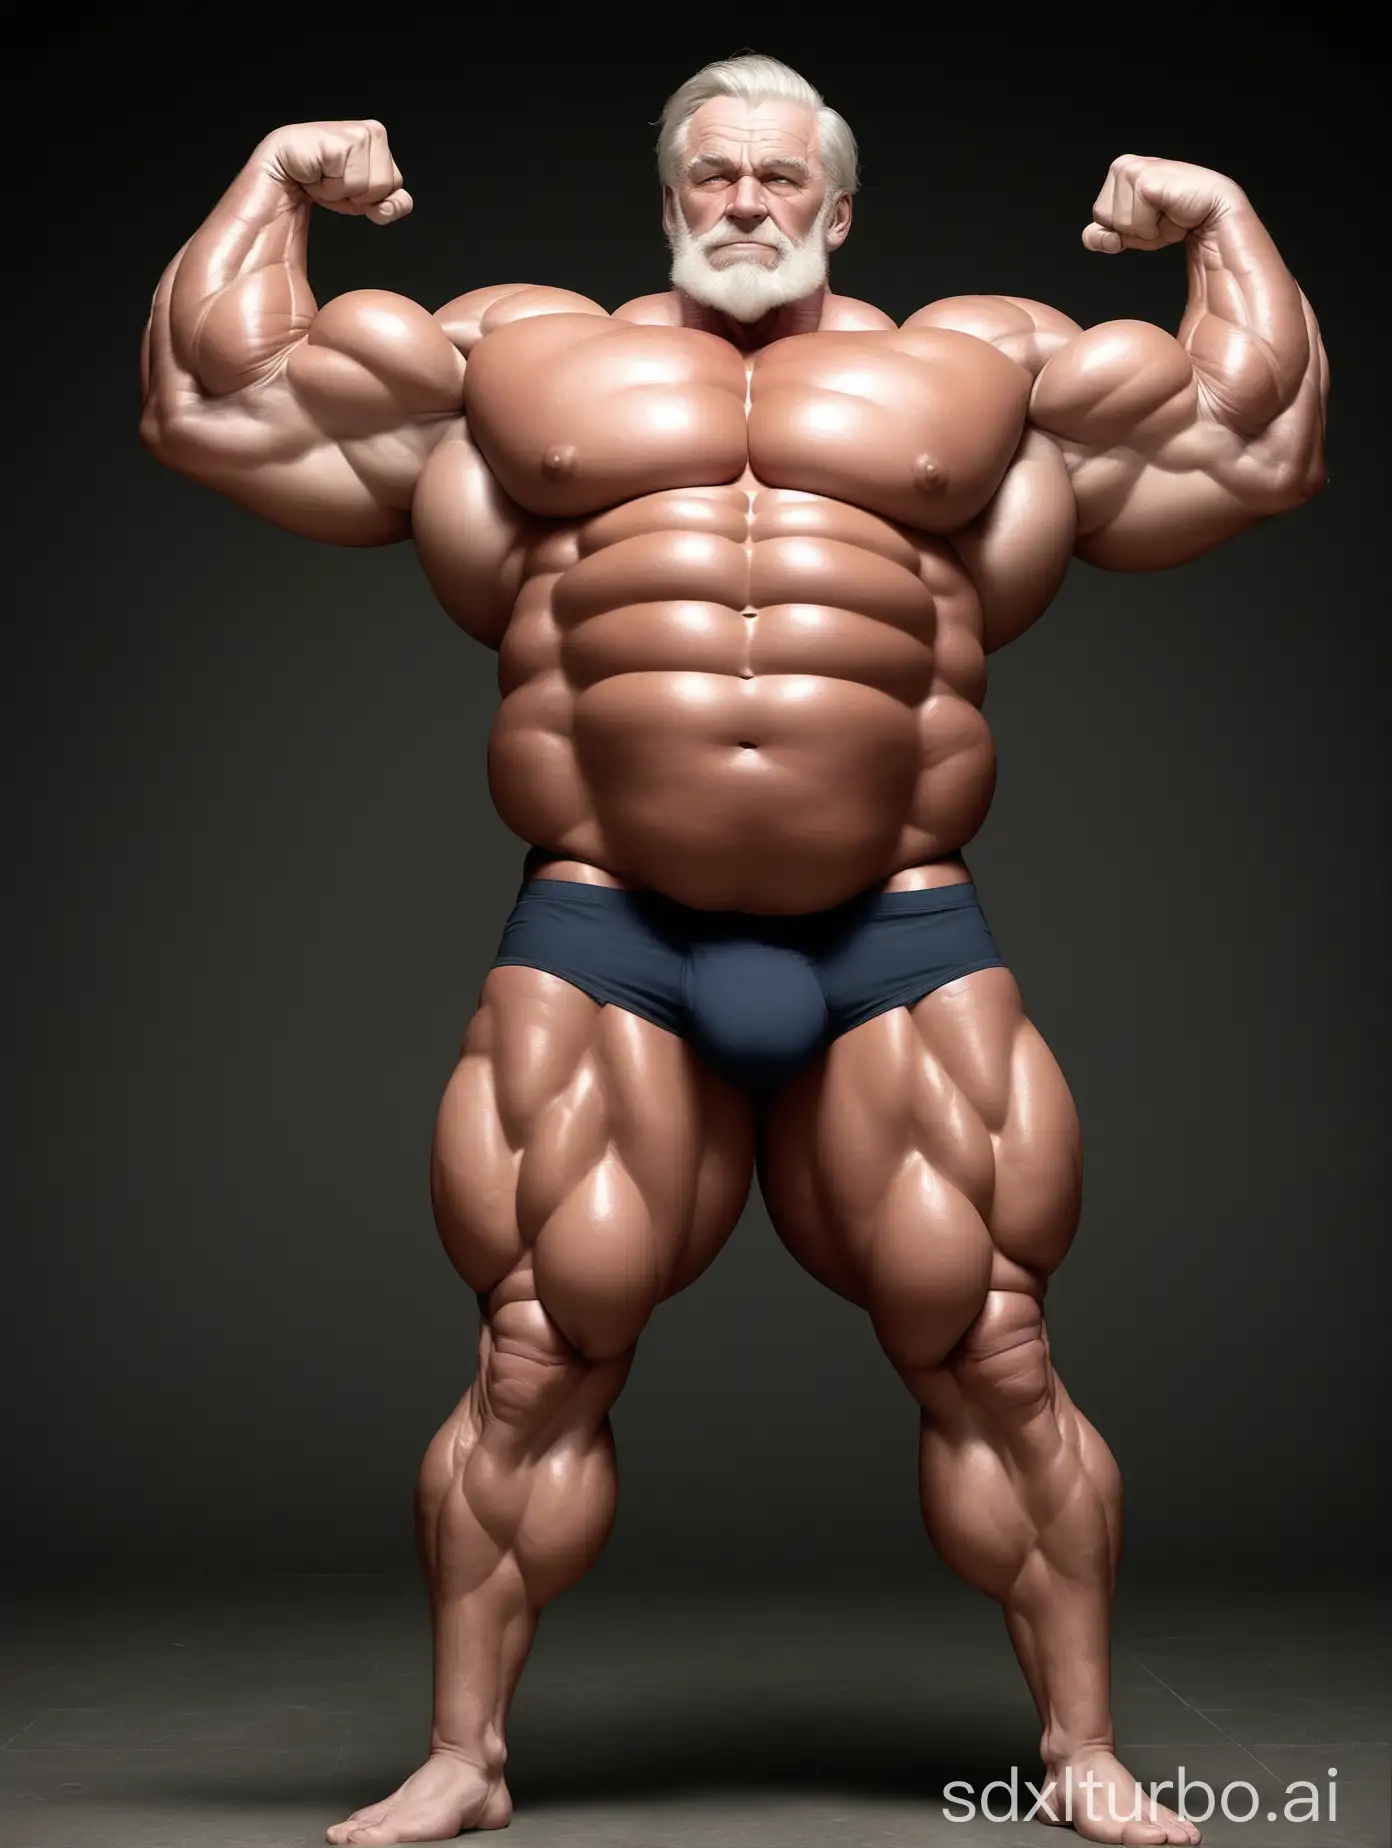 Massive-Muscle-Man-Flexing-His-Biceps-in-Underwear